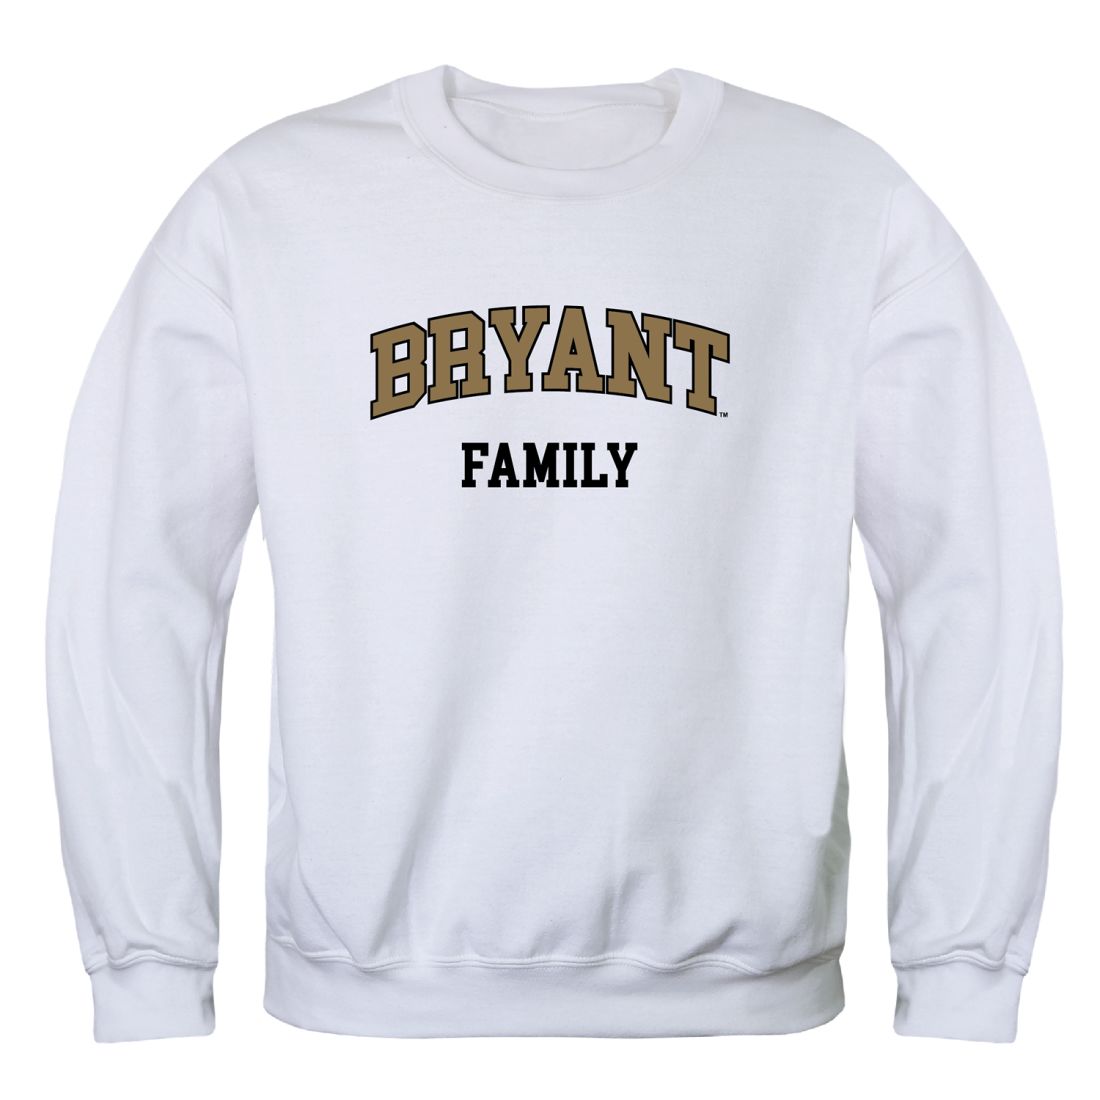 Bryant-University-Bulldogs-Family-Fleece-Crewneck-Pullover-Sweatshirt